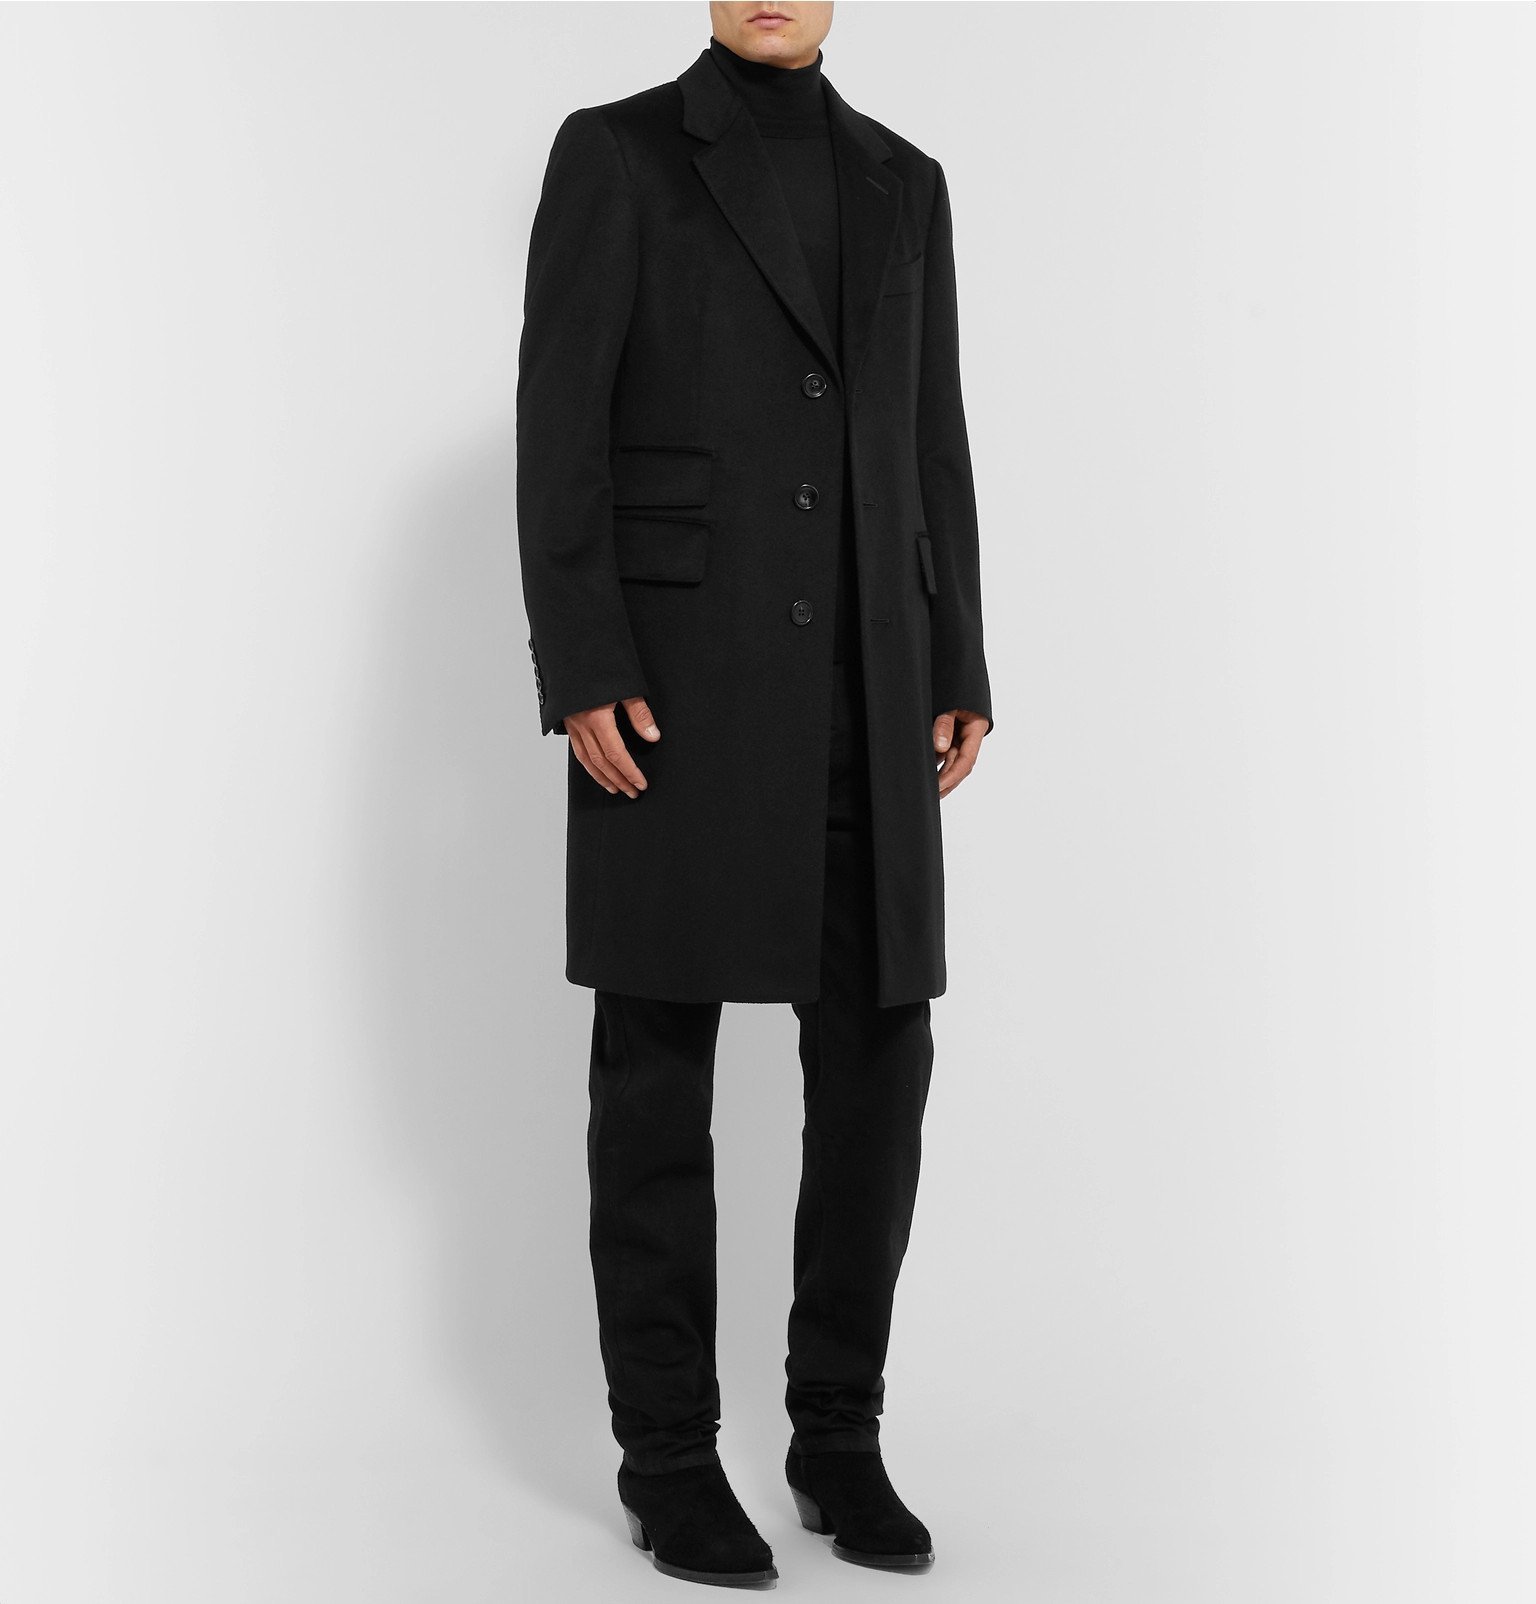 TOM FORD - Cashmere Overcoat - Black TOM FORD